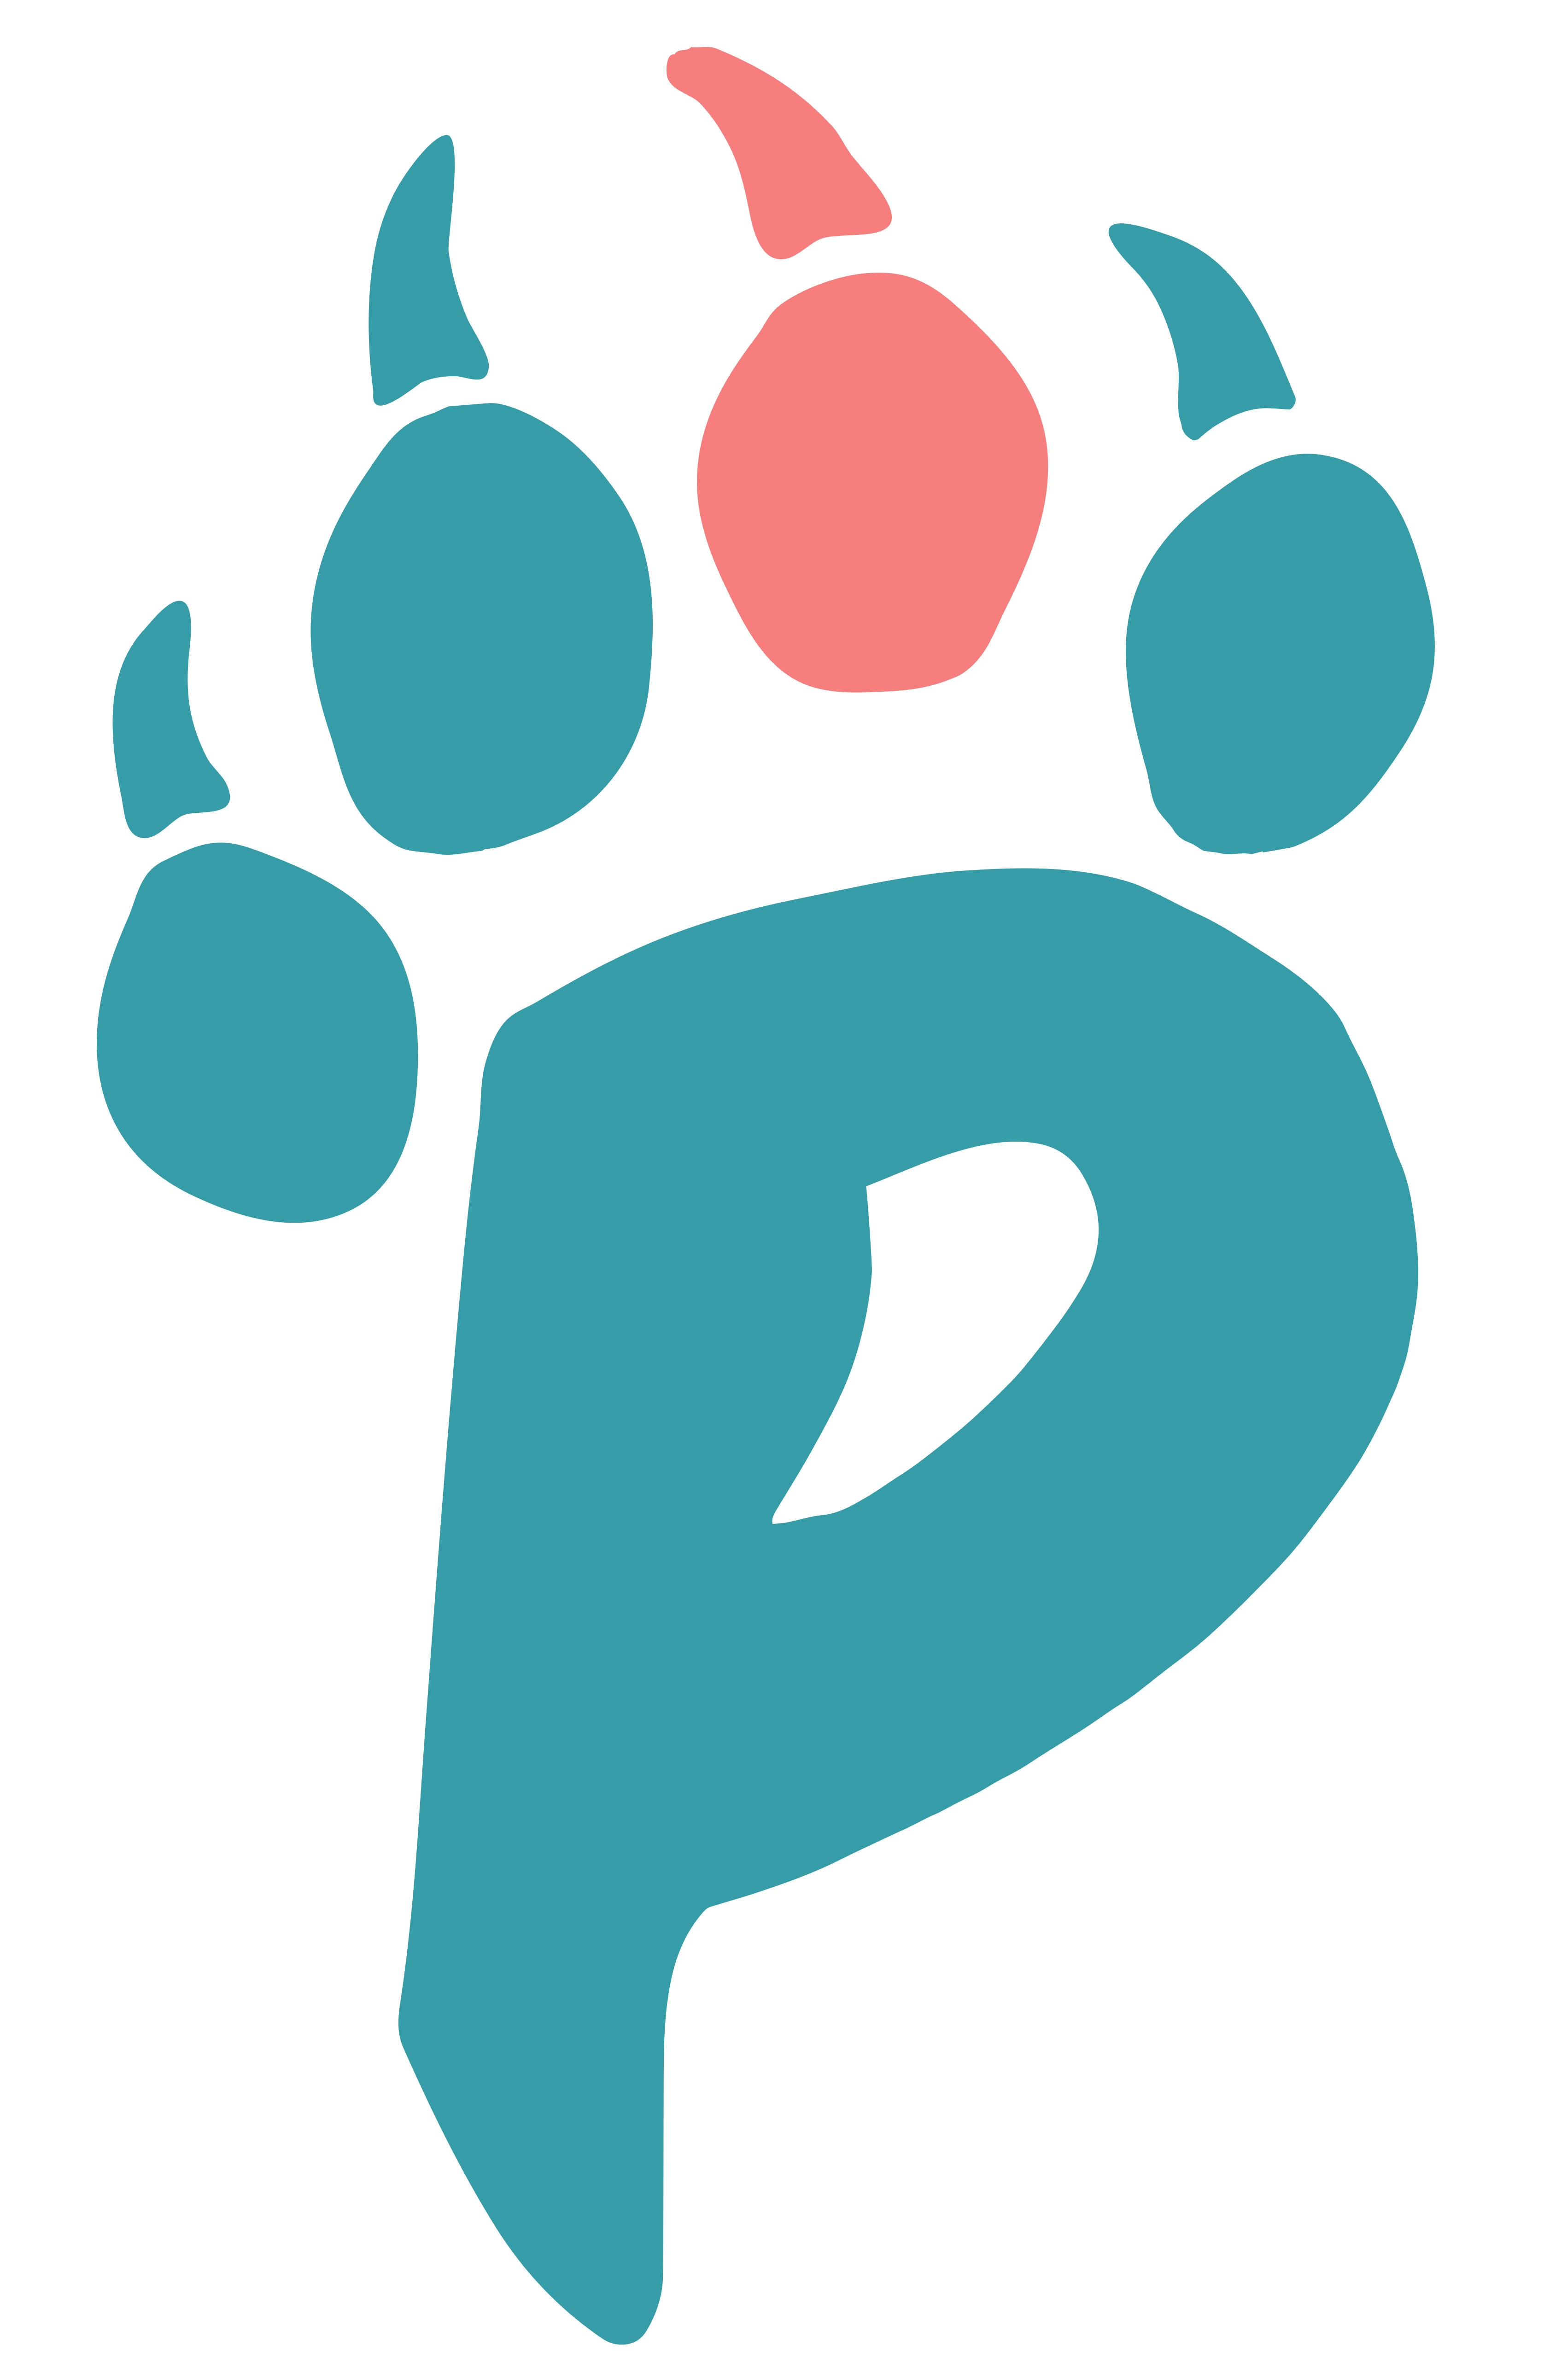 The new Paw Print Pet Blog logo!